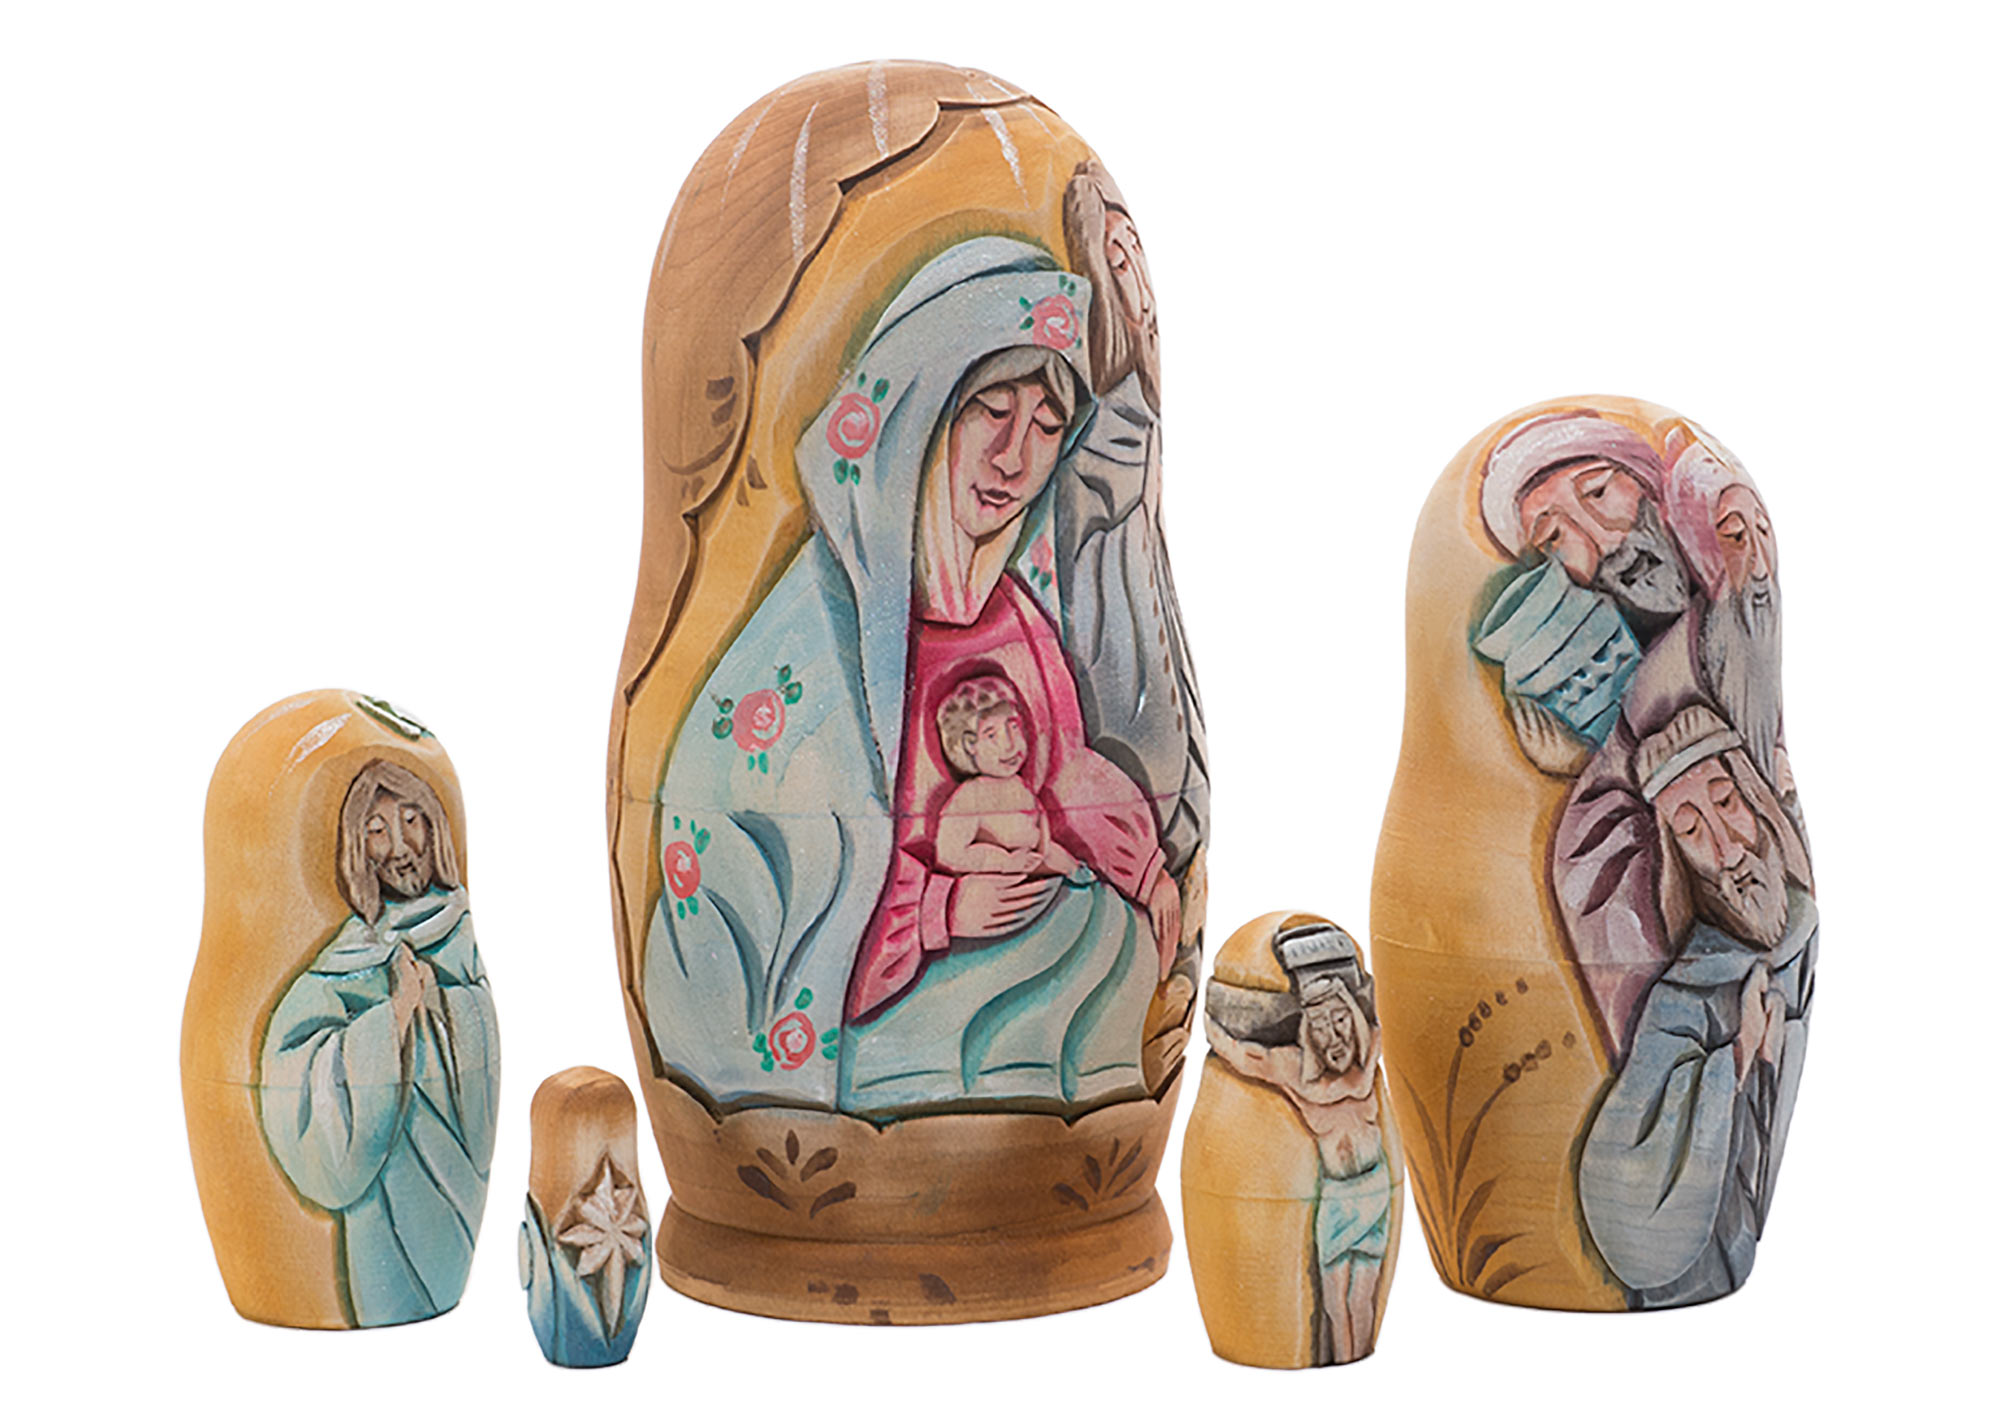 Buy Carved Life of Christ Nesting Doll by Koblov 5pc./7" at GoldenCockerel.com